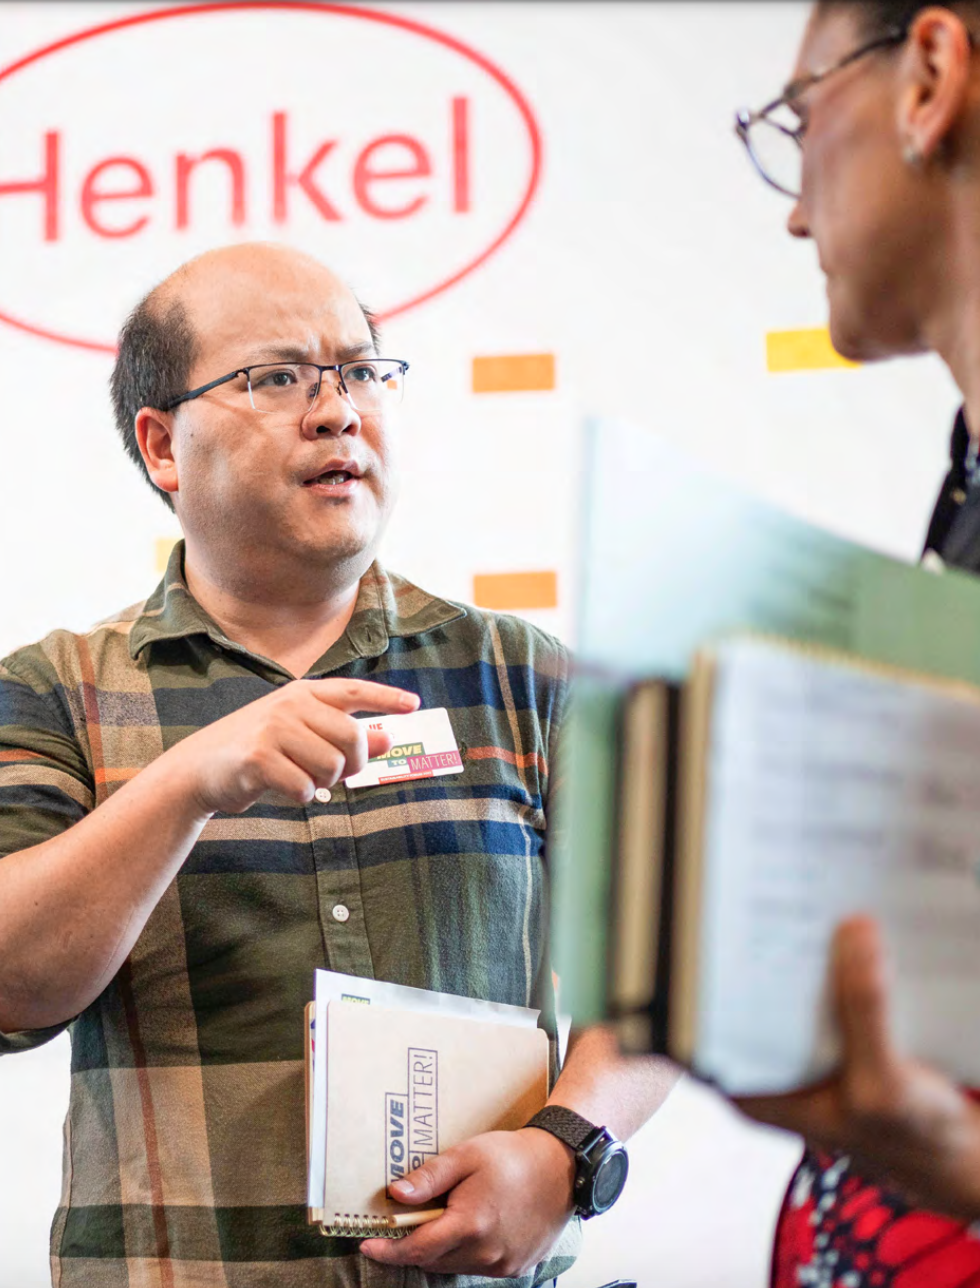 Henkel employees talking, carrying paperwork